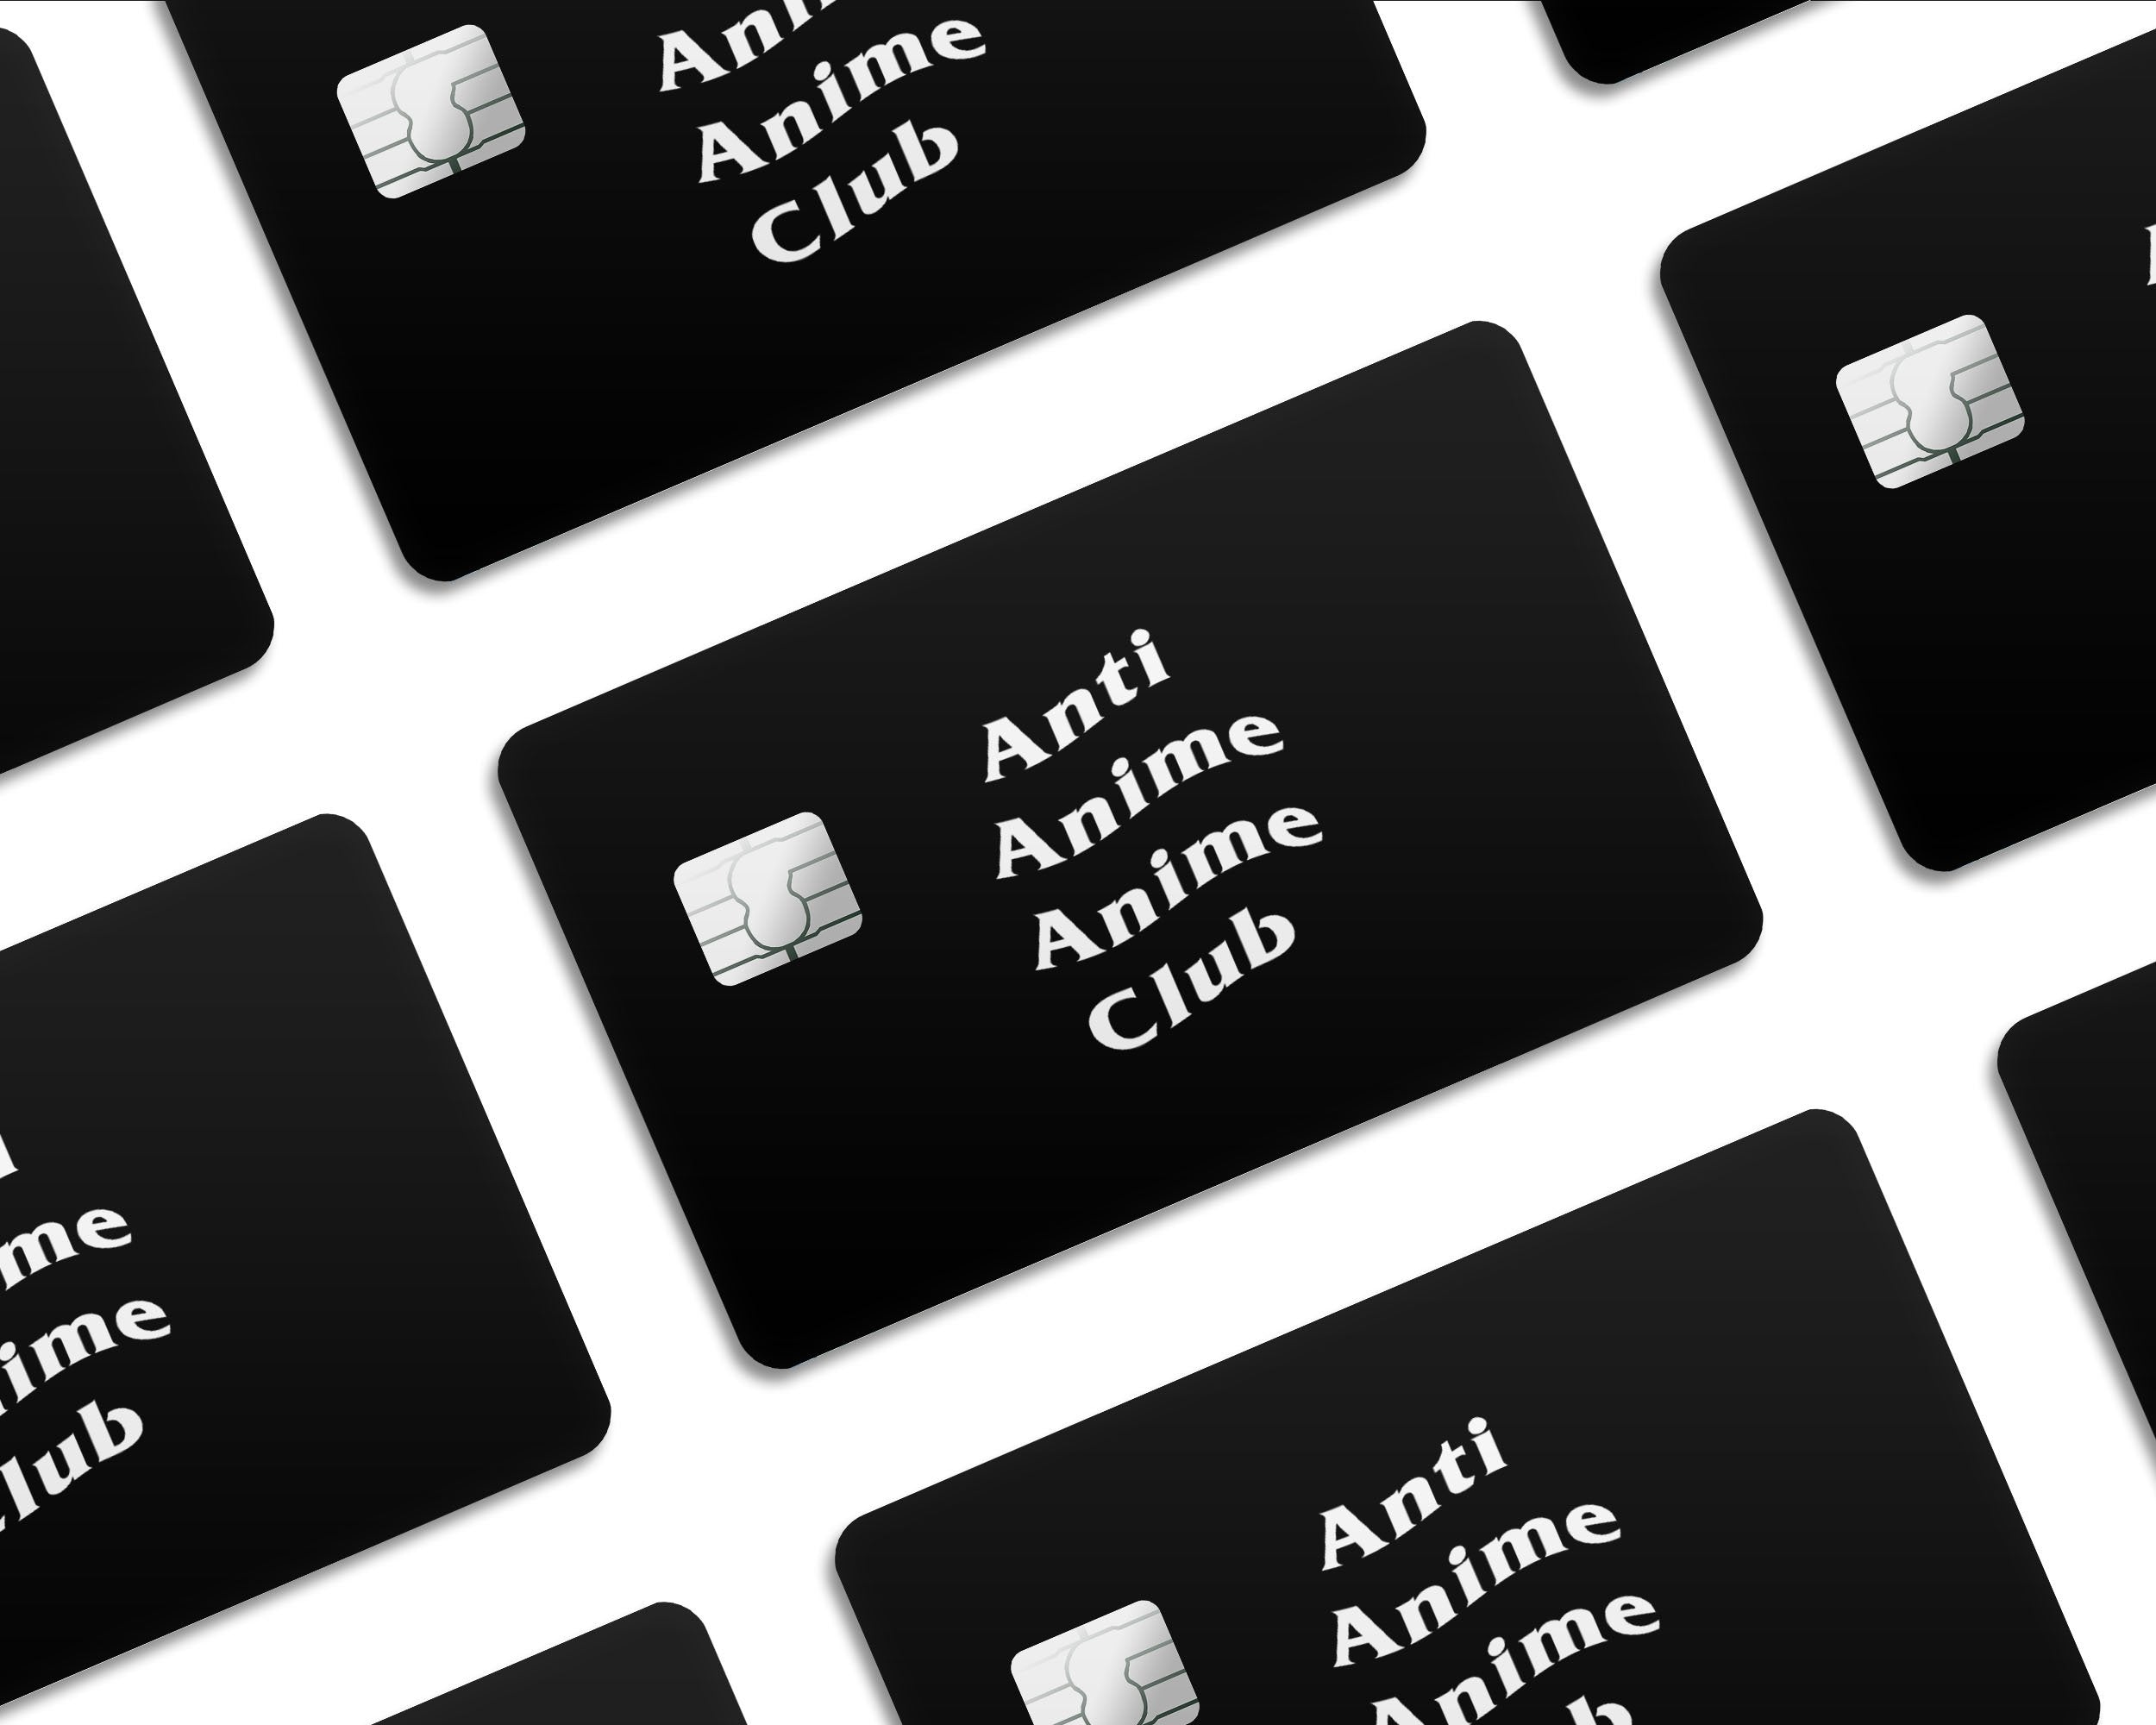 Details 151+ anti anime anime club latest - 3tdesign.edu.vn